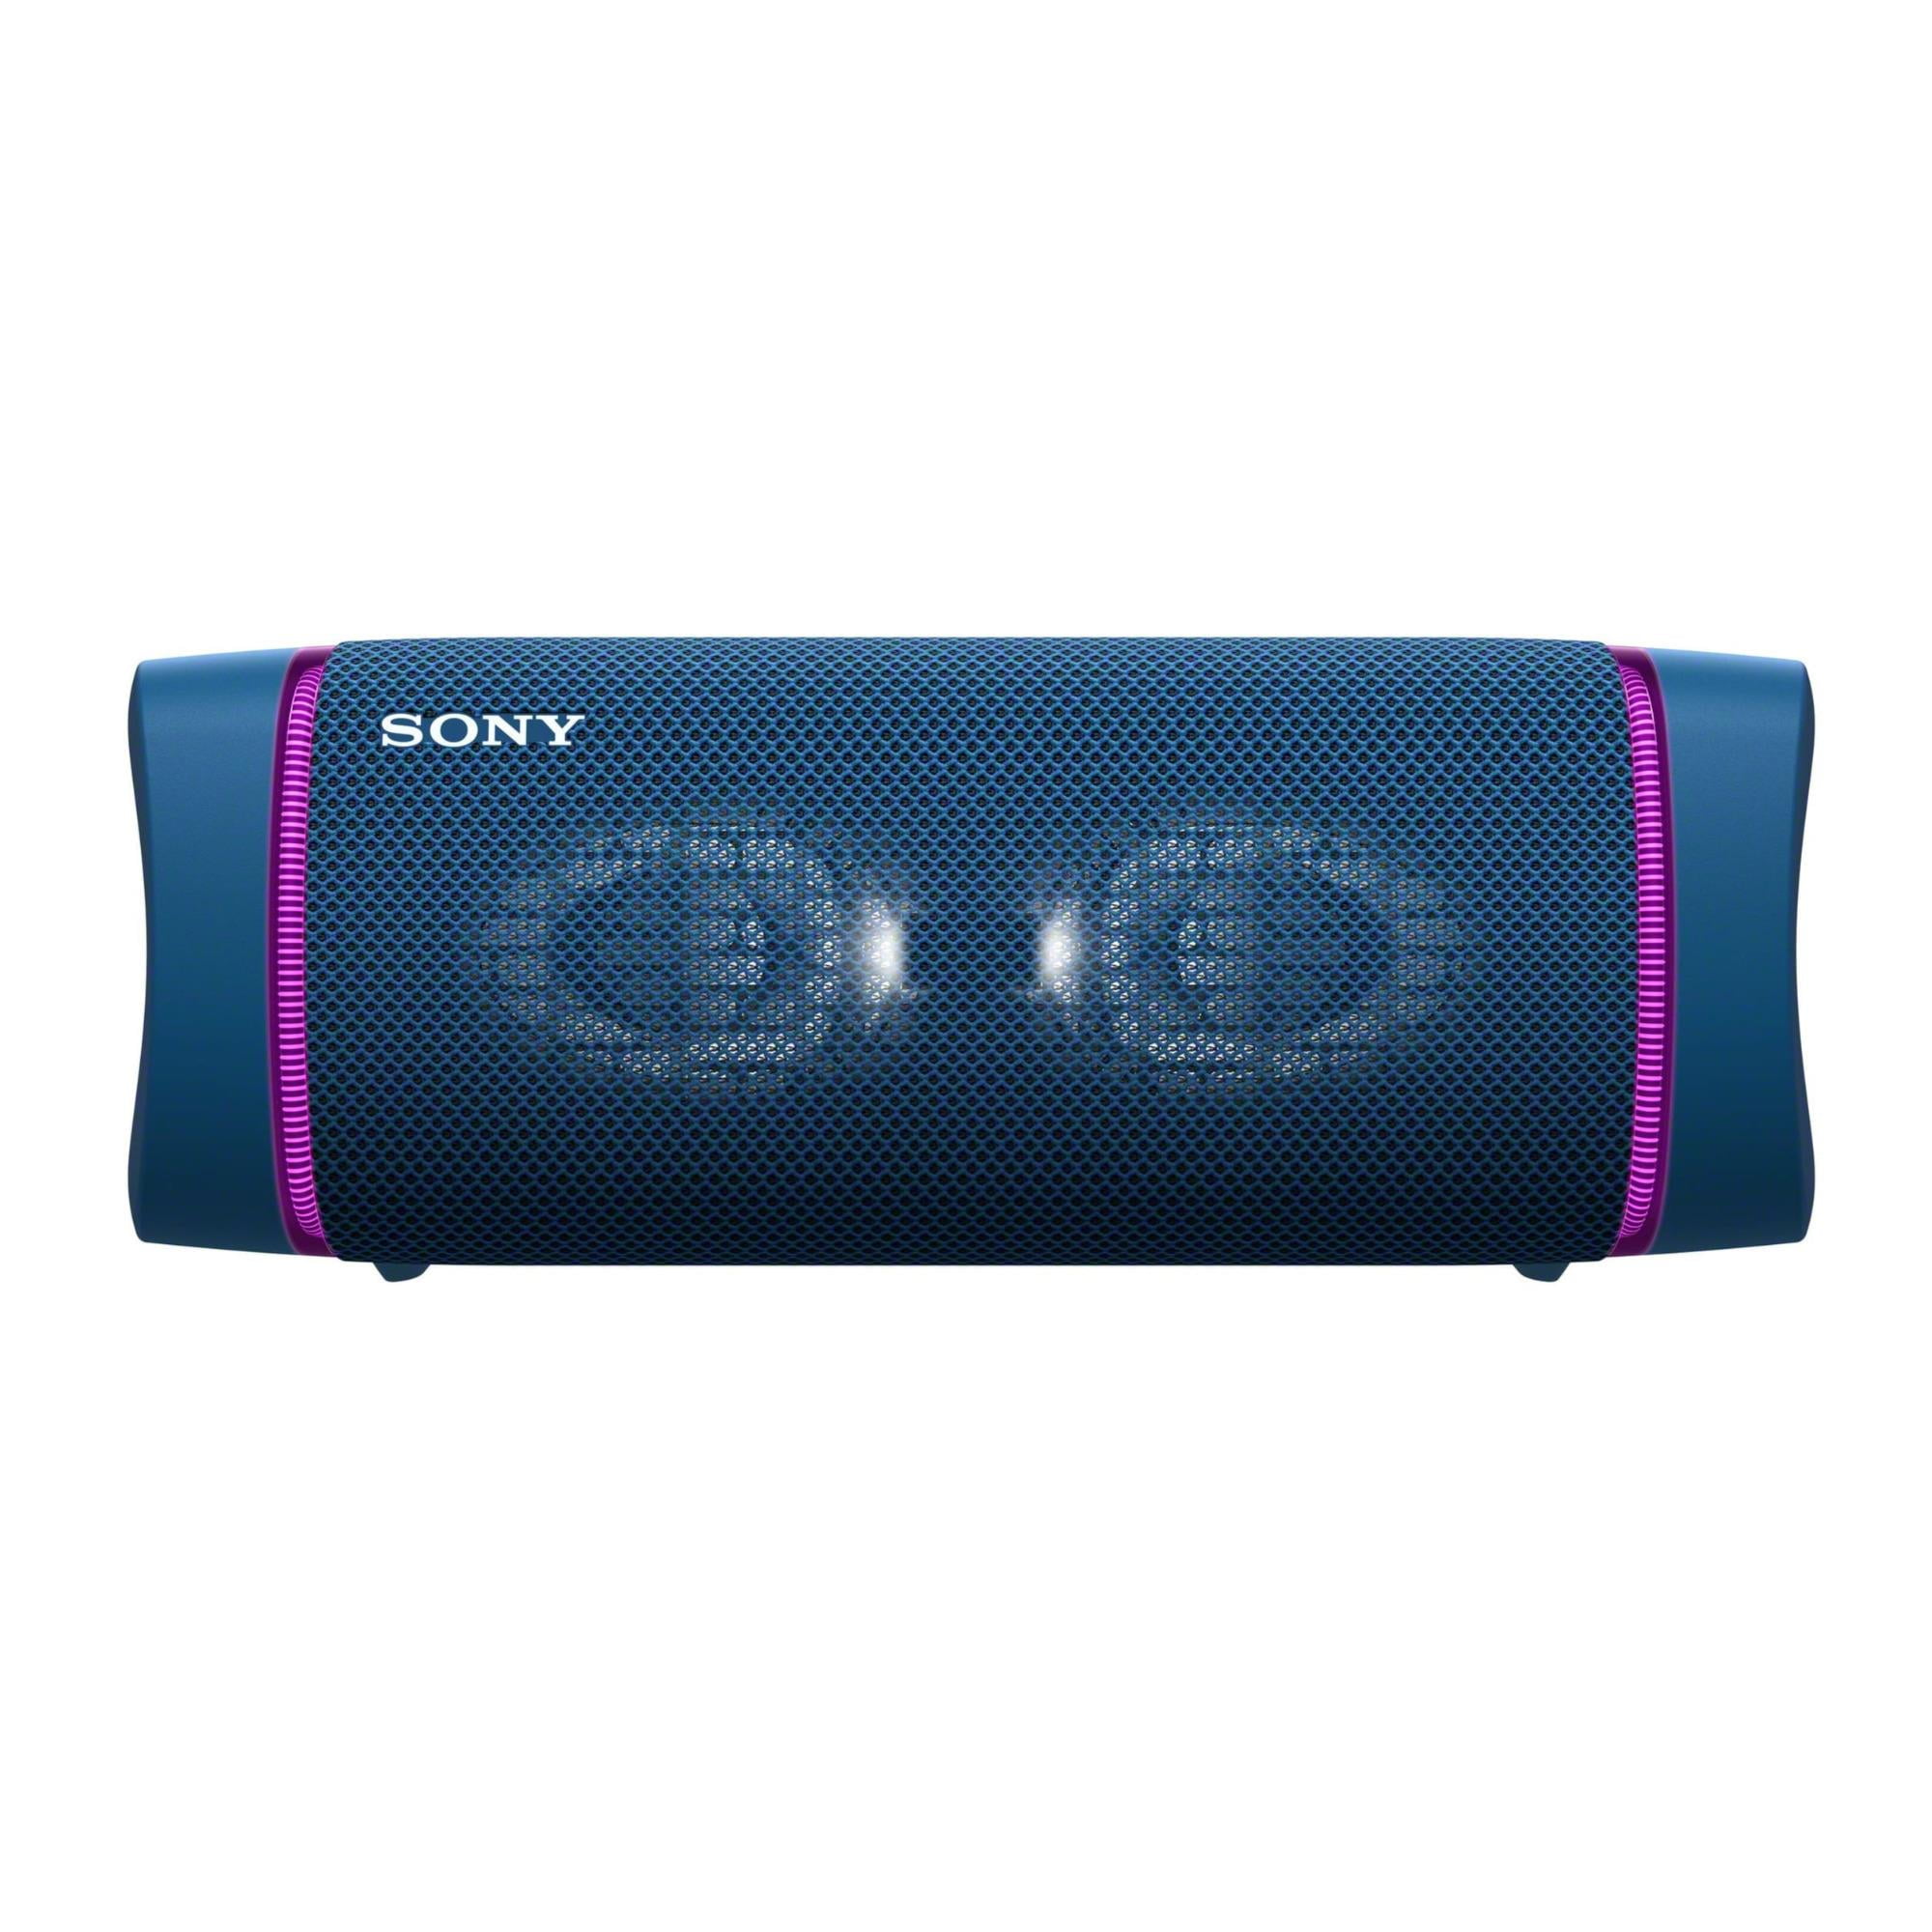 Sony Portable Bluetooth Speaker with Waterproof, Black